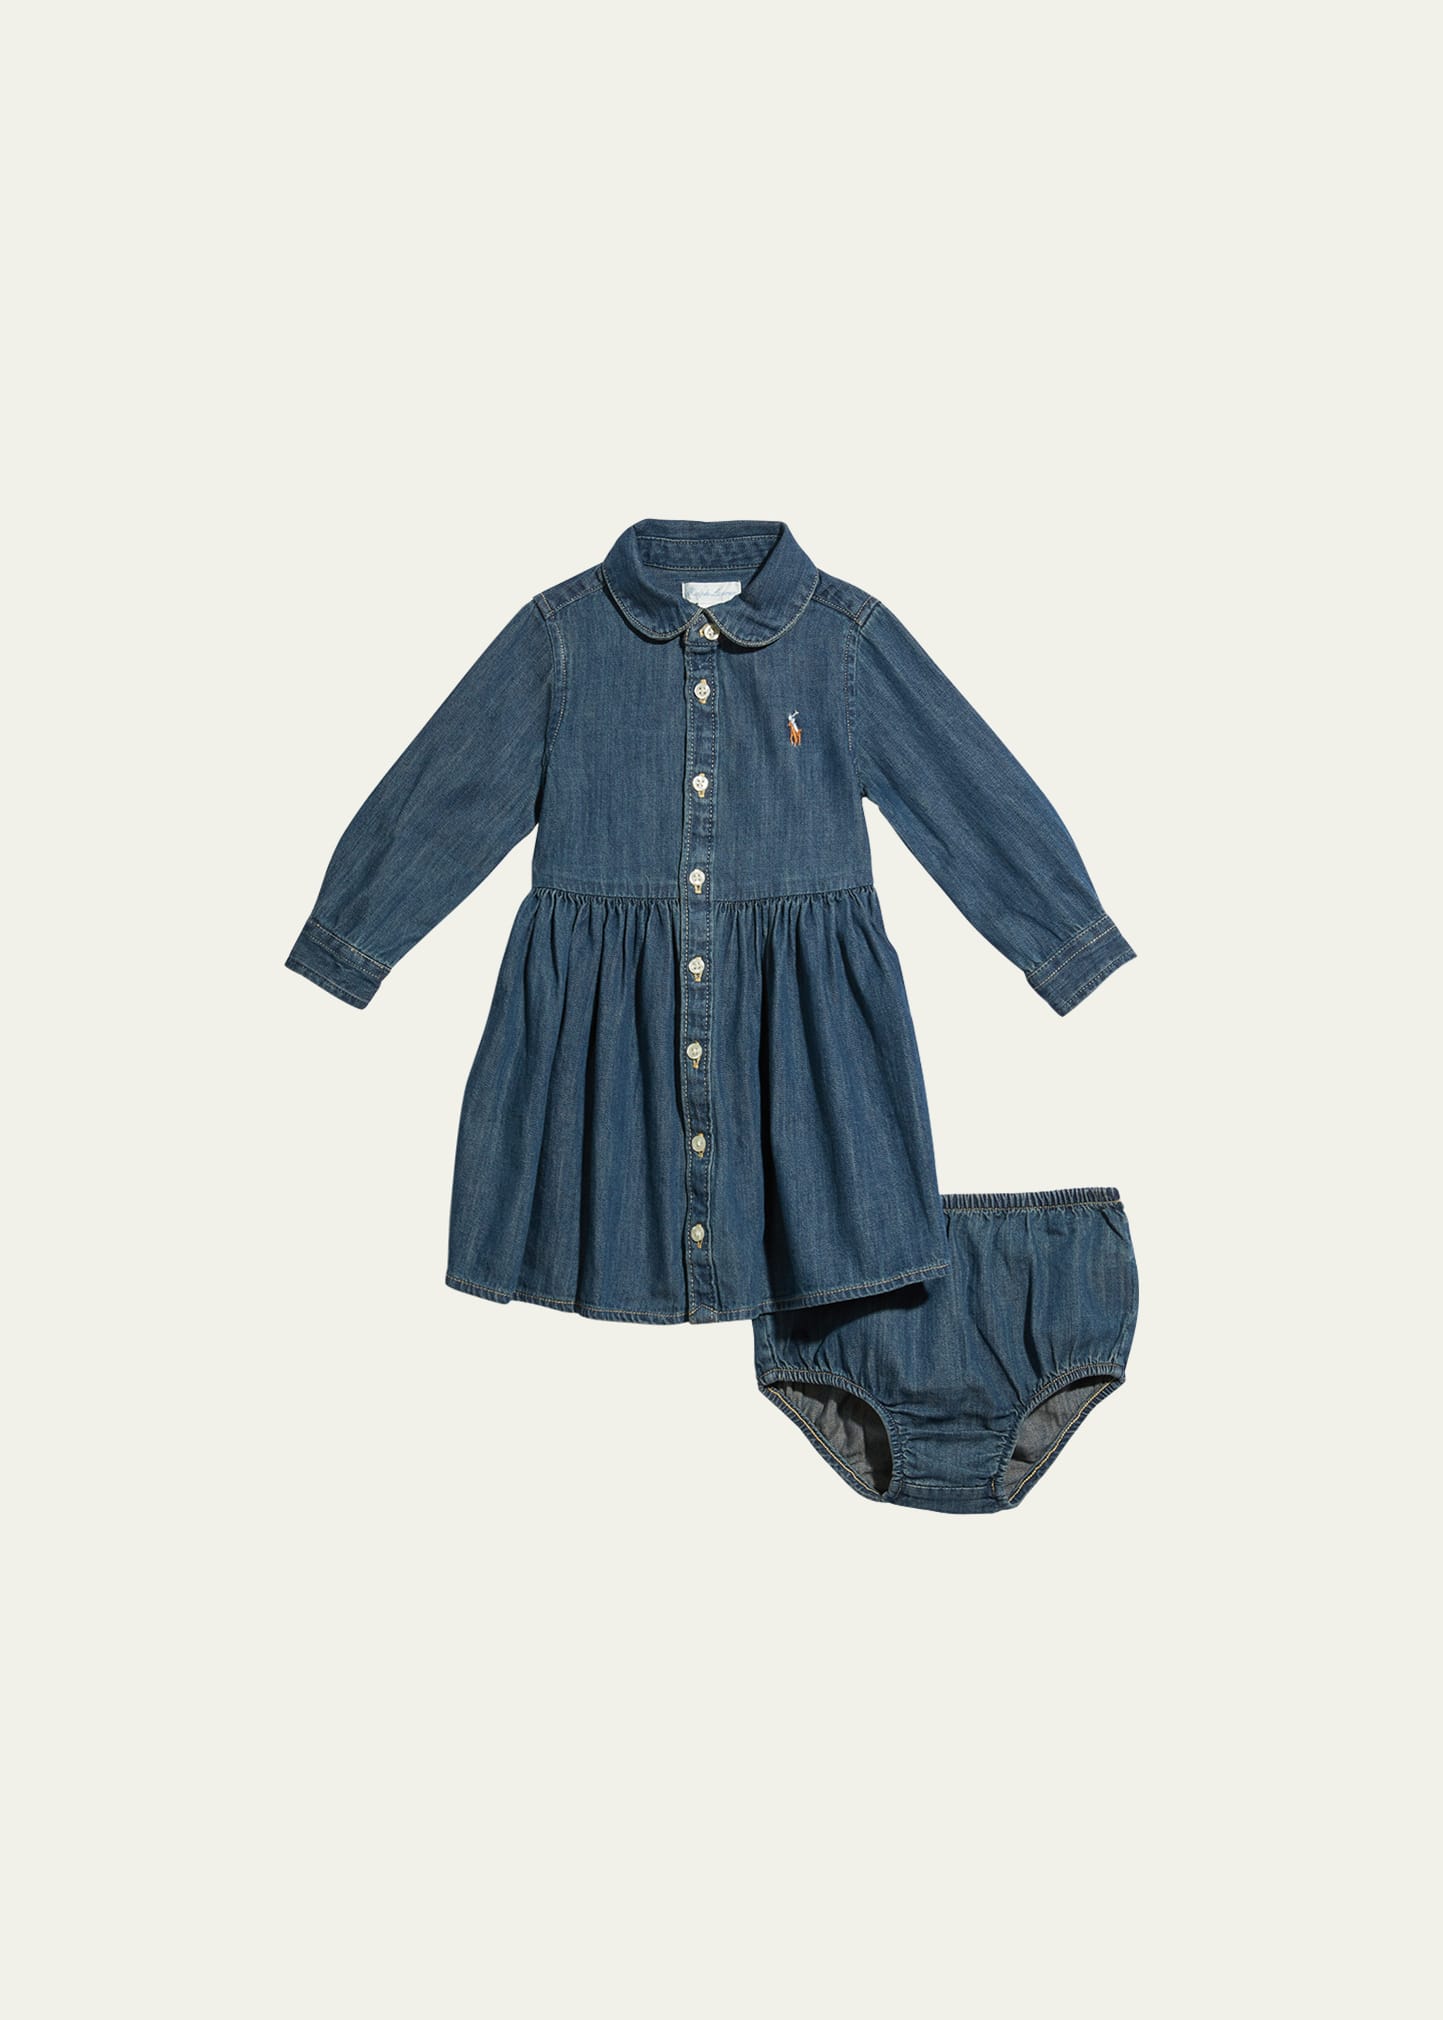 Ralph Lauren Kids' Girl's Belted Fit-and-flare Denim Shirtdress In Indigo